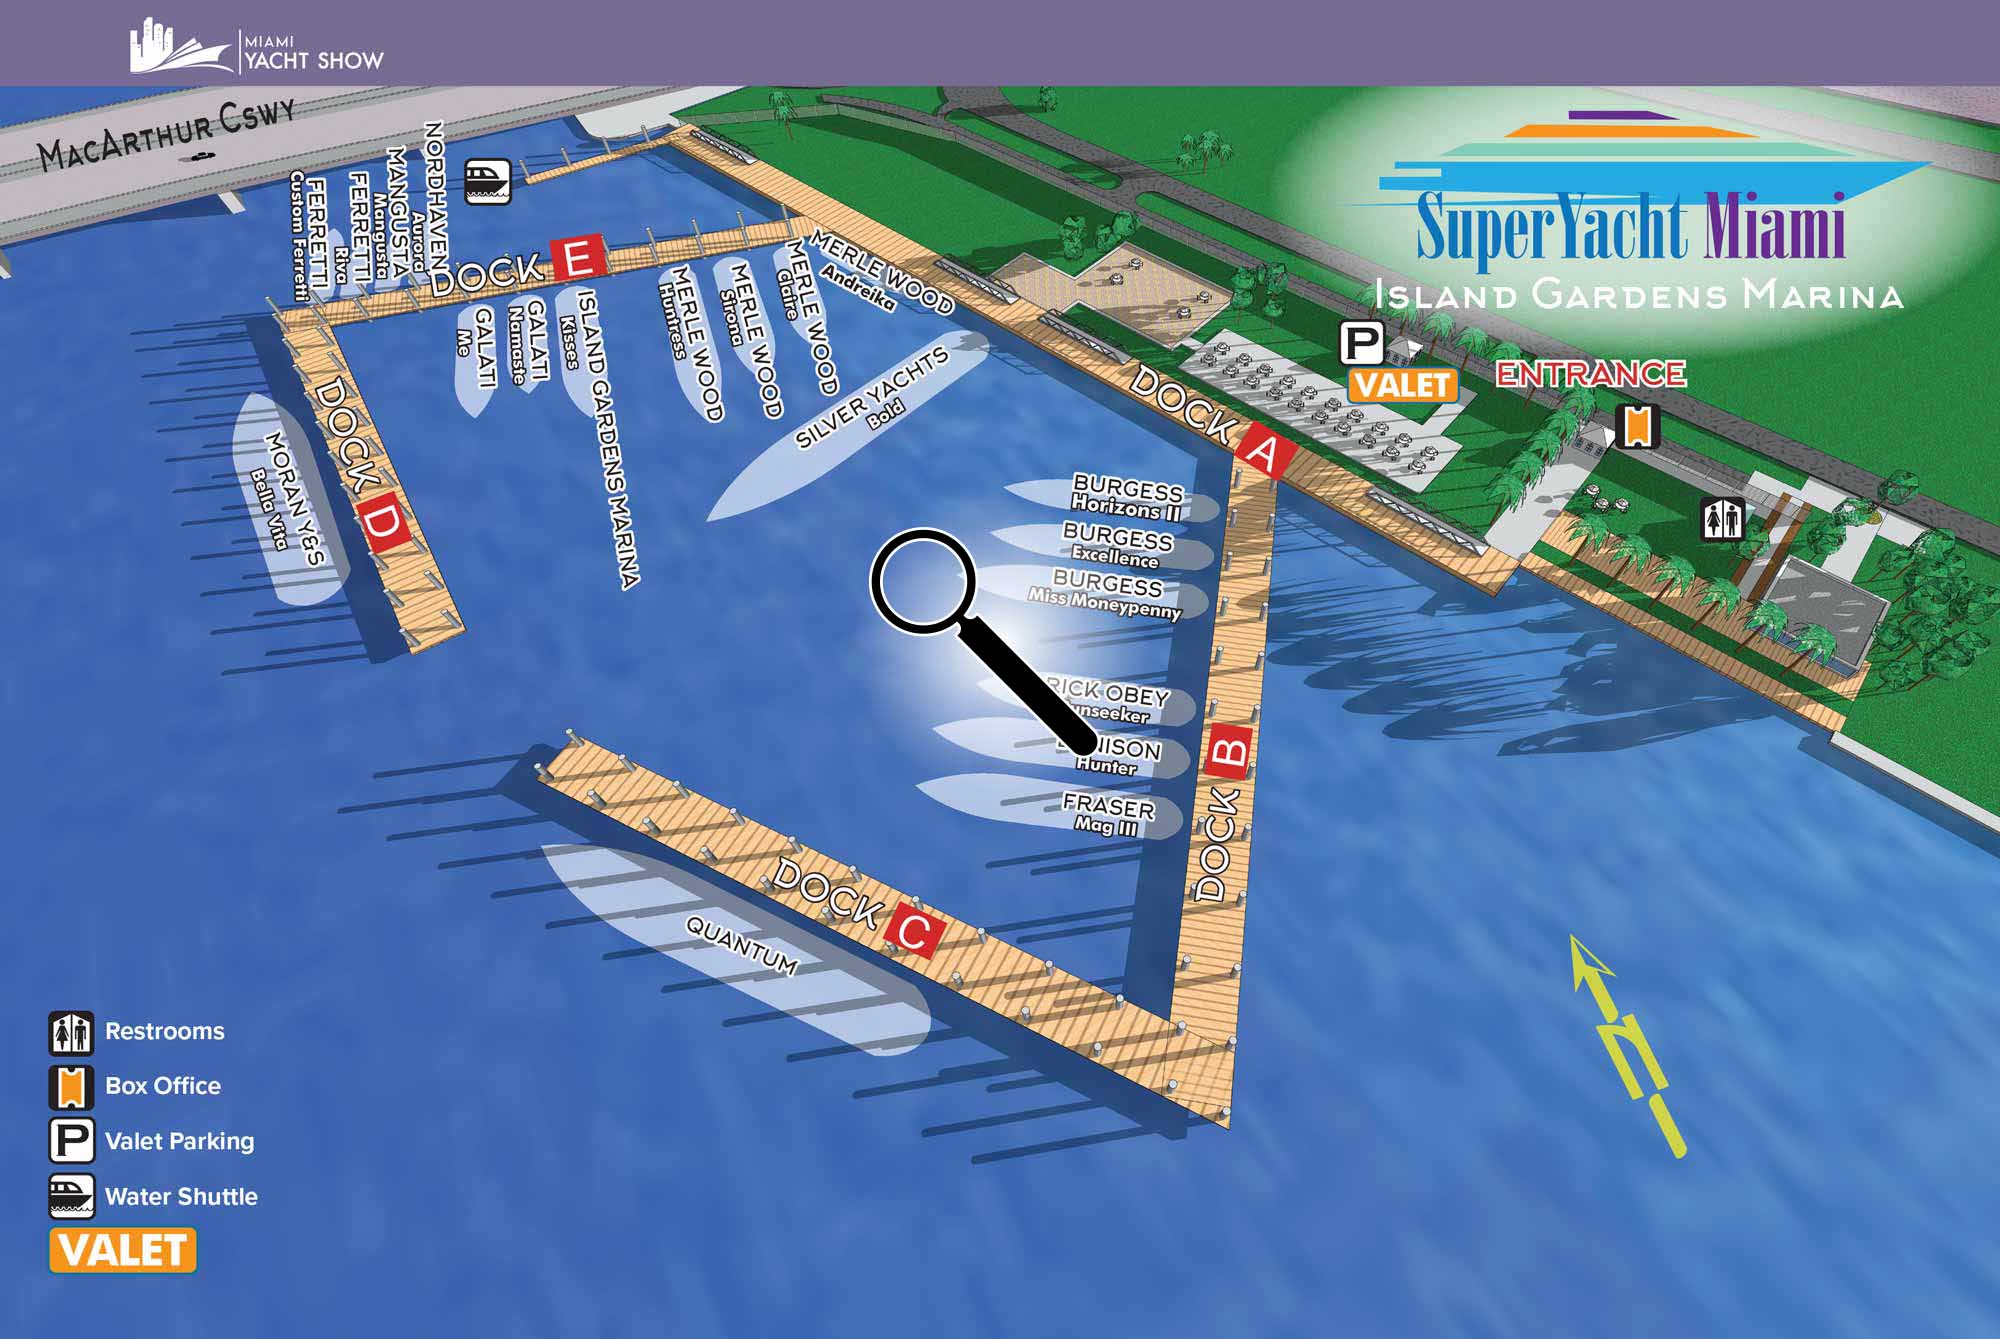 super yacht miami map february 13-17, 2020 |john potter